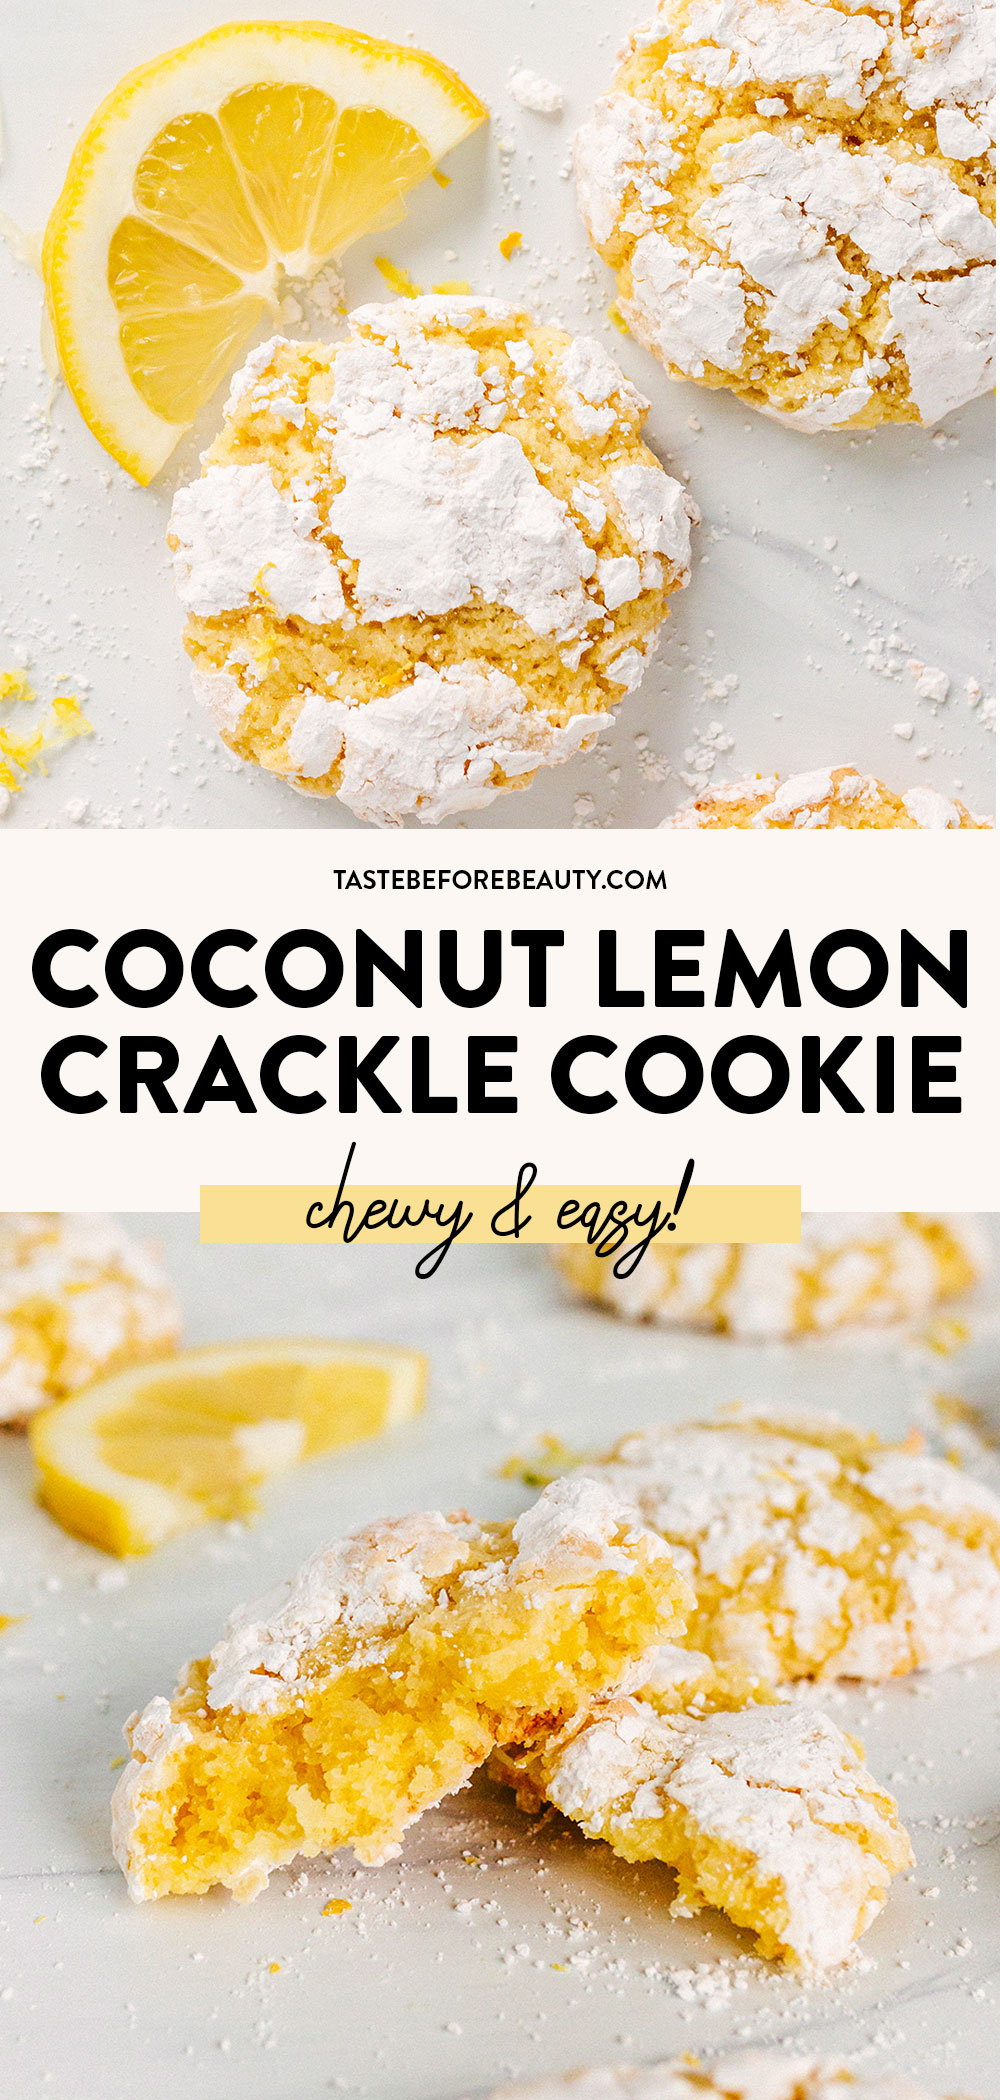 taste before beauty coconut lemon crackle cookie pinterest pin